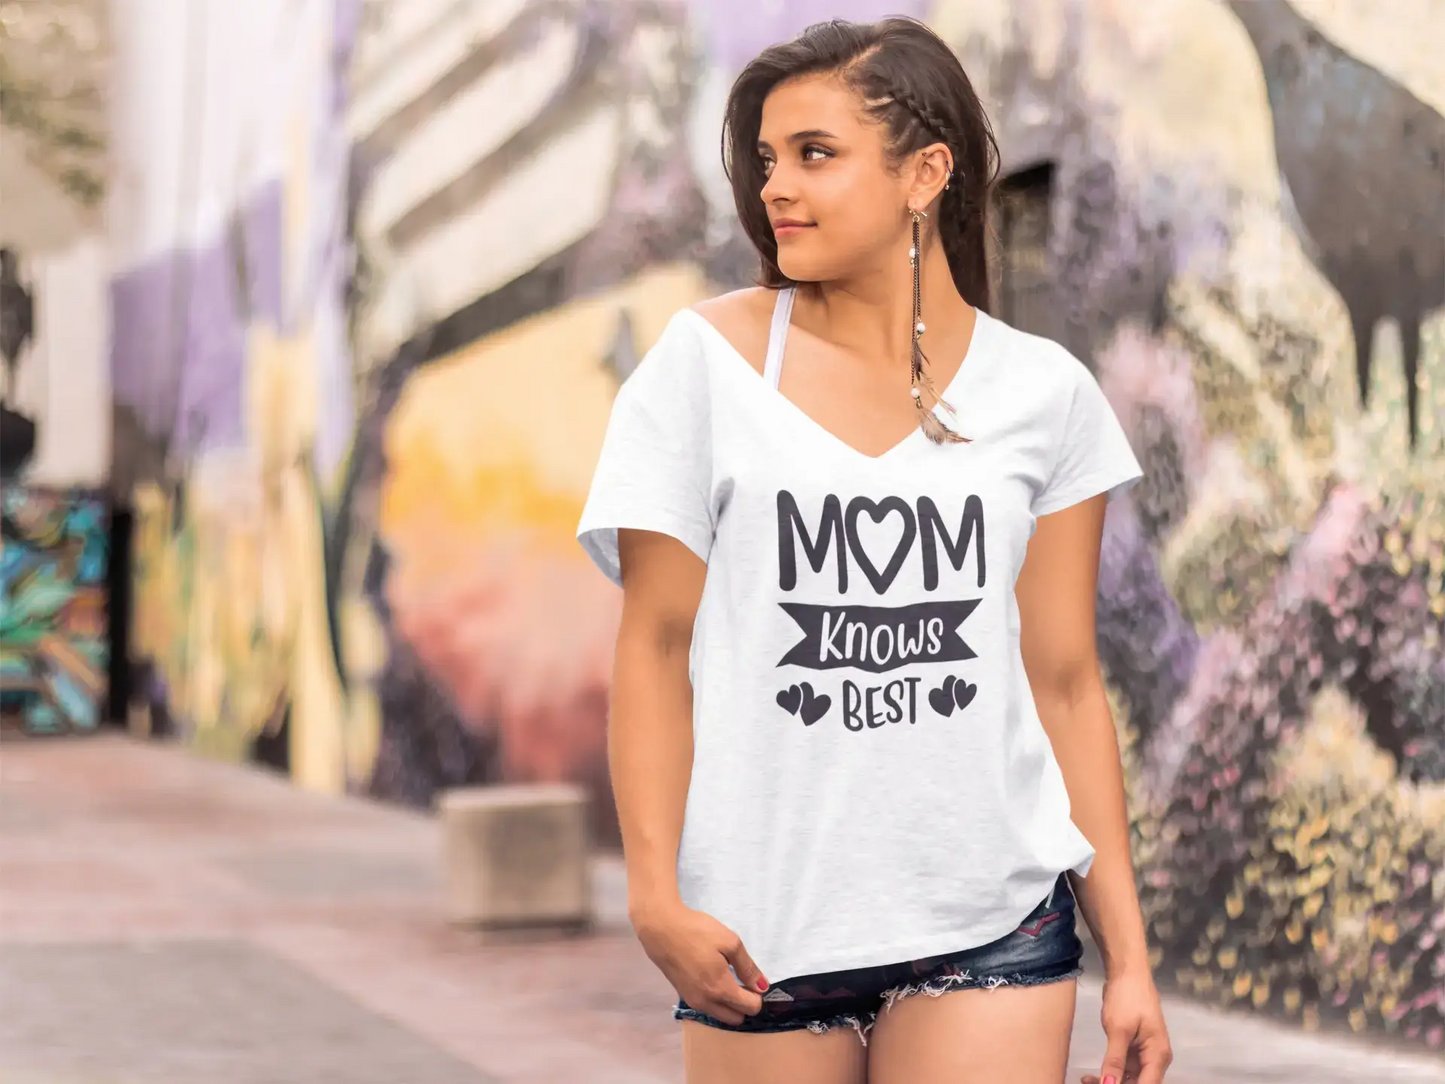 ULTRABASIC Women's T-Shirt Mom Knows Best - Hearts Short Sleeve Tee Shirt Tops